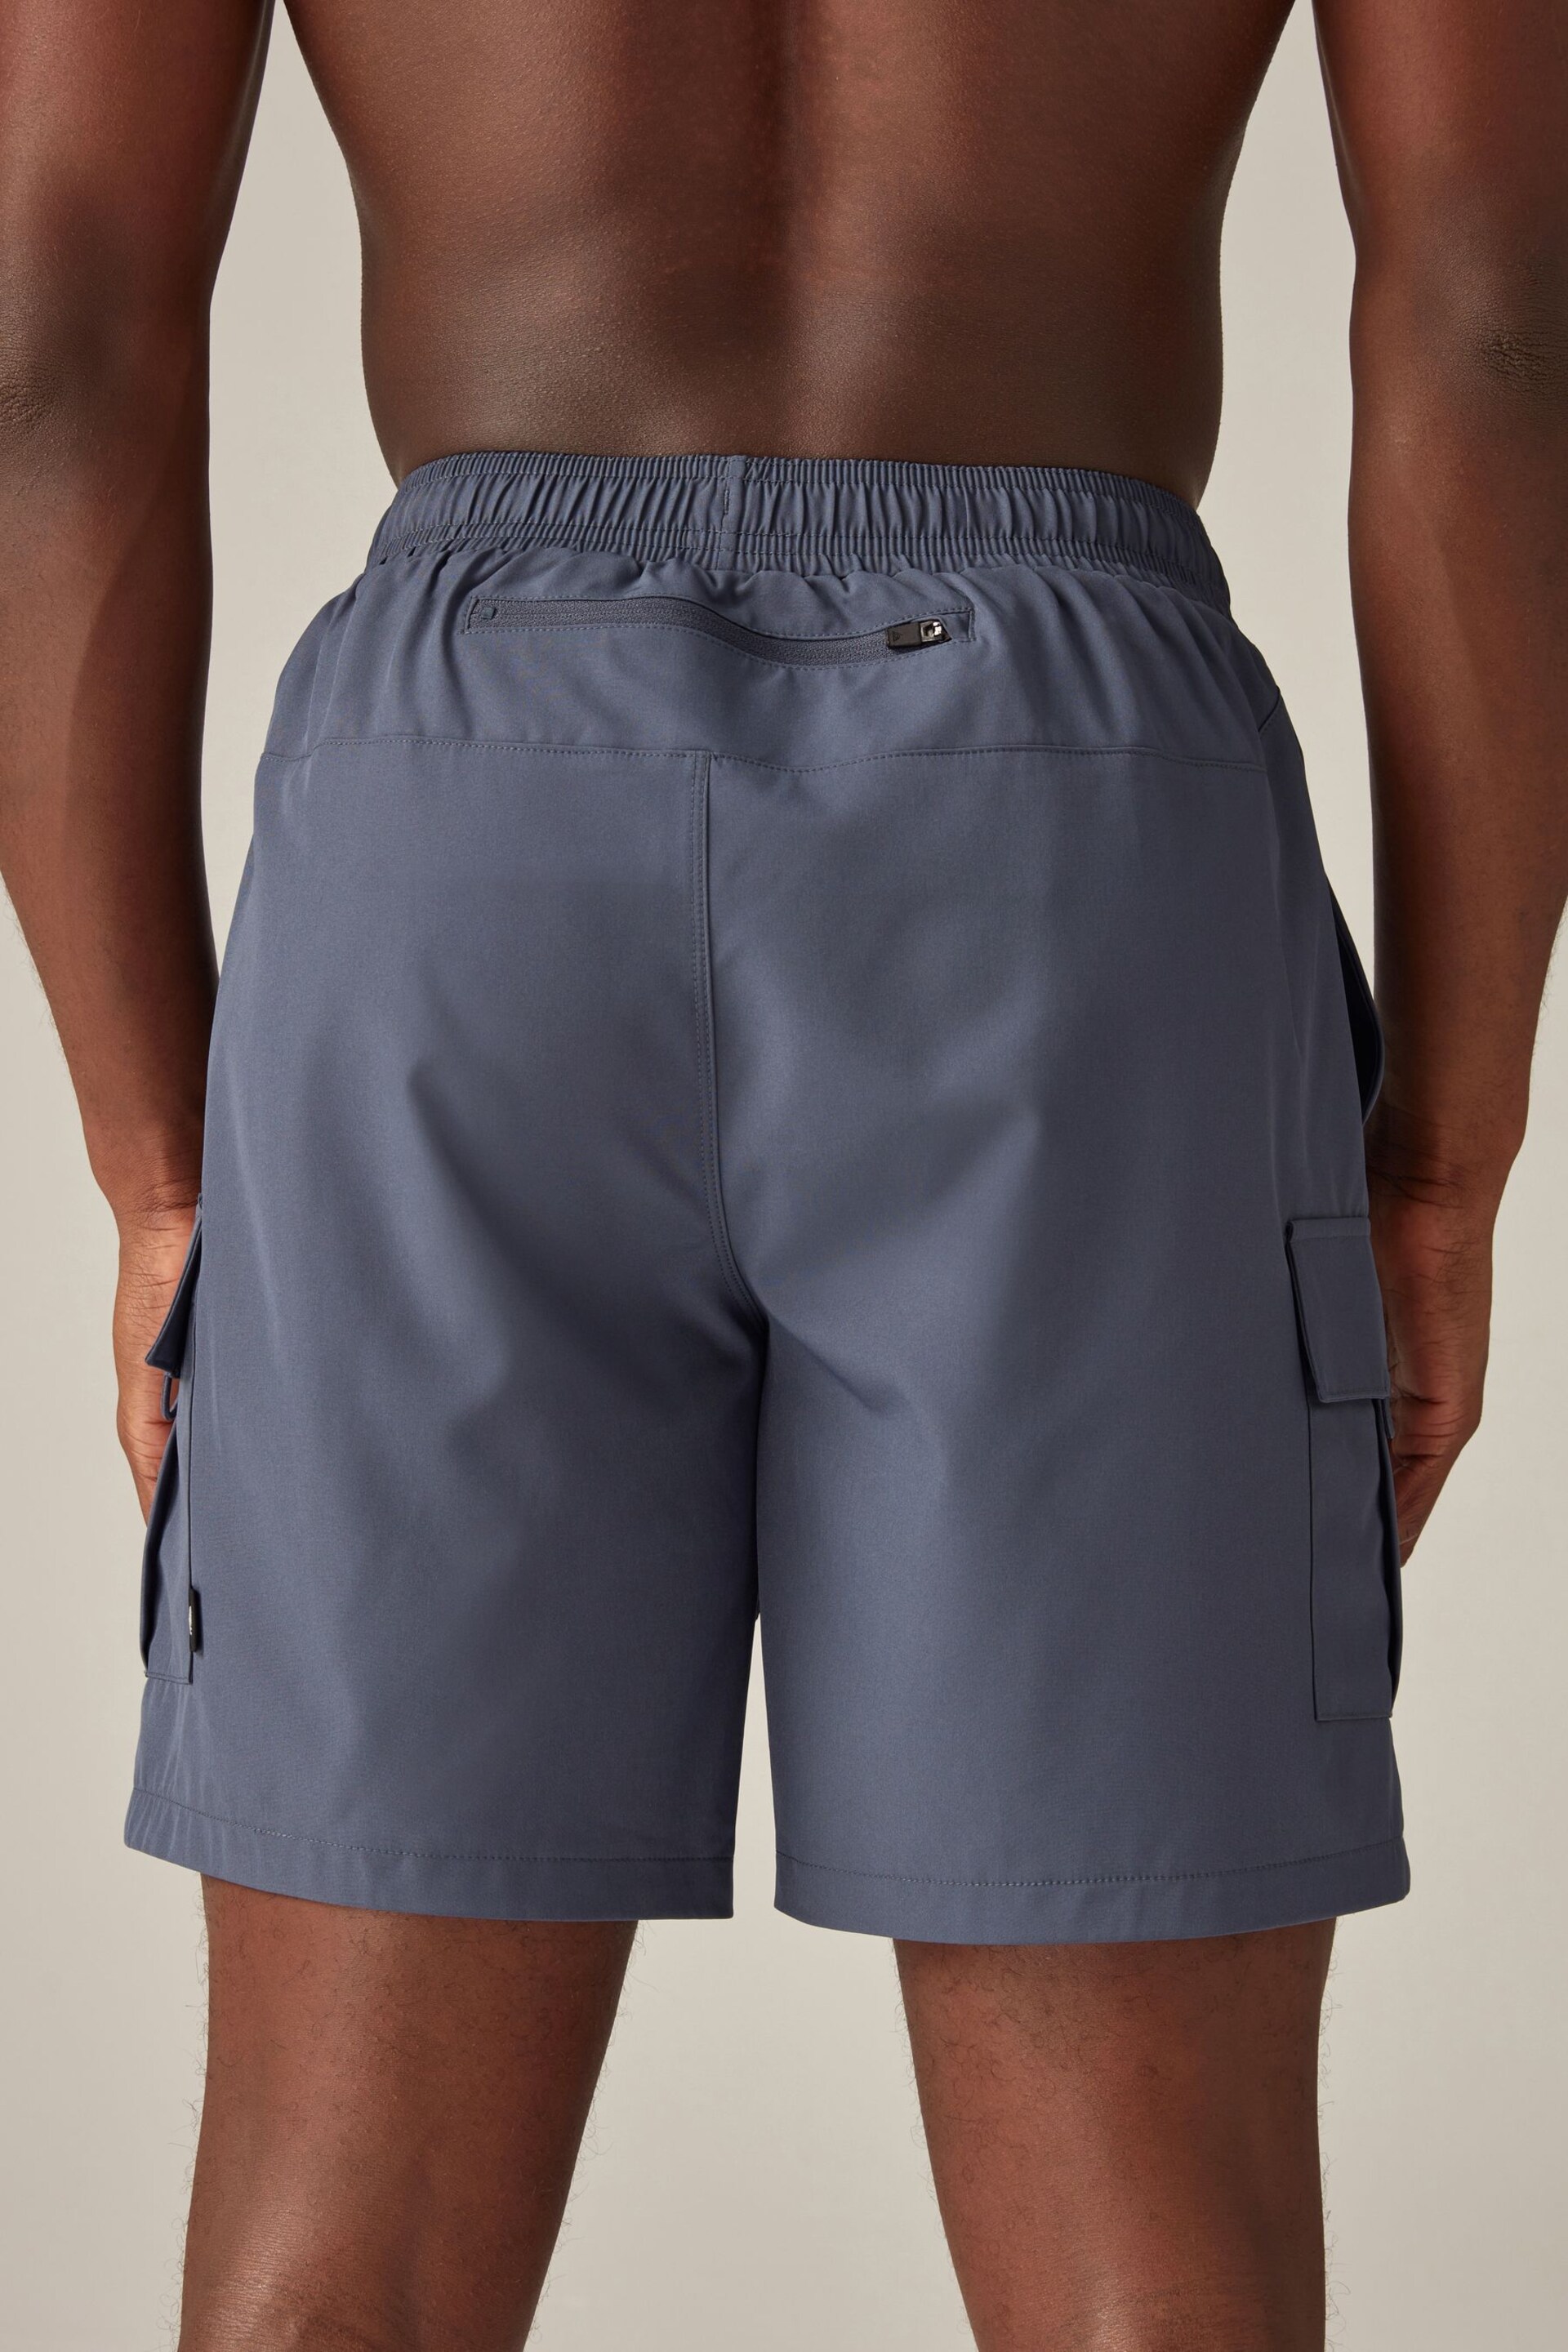 Blue Shorts Active Gym Sports Shorts - Image 3 of 11